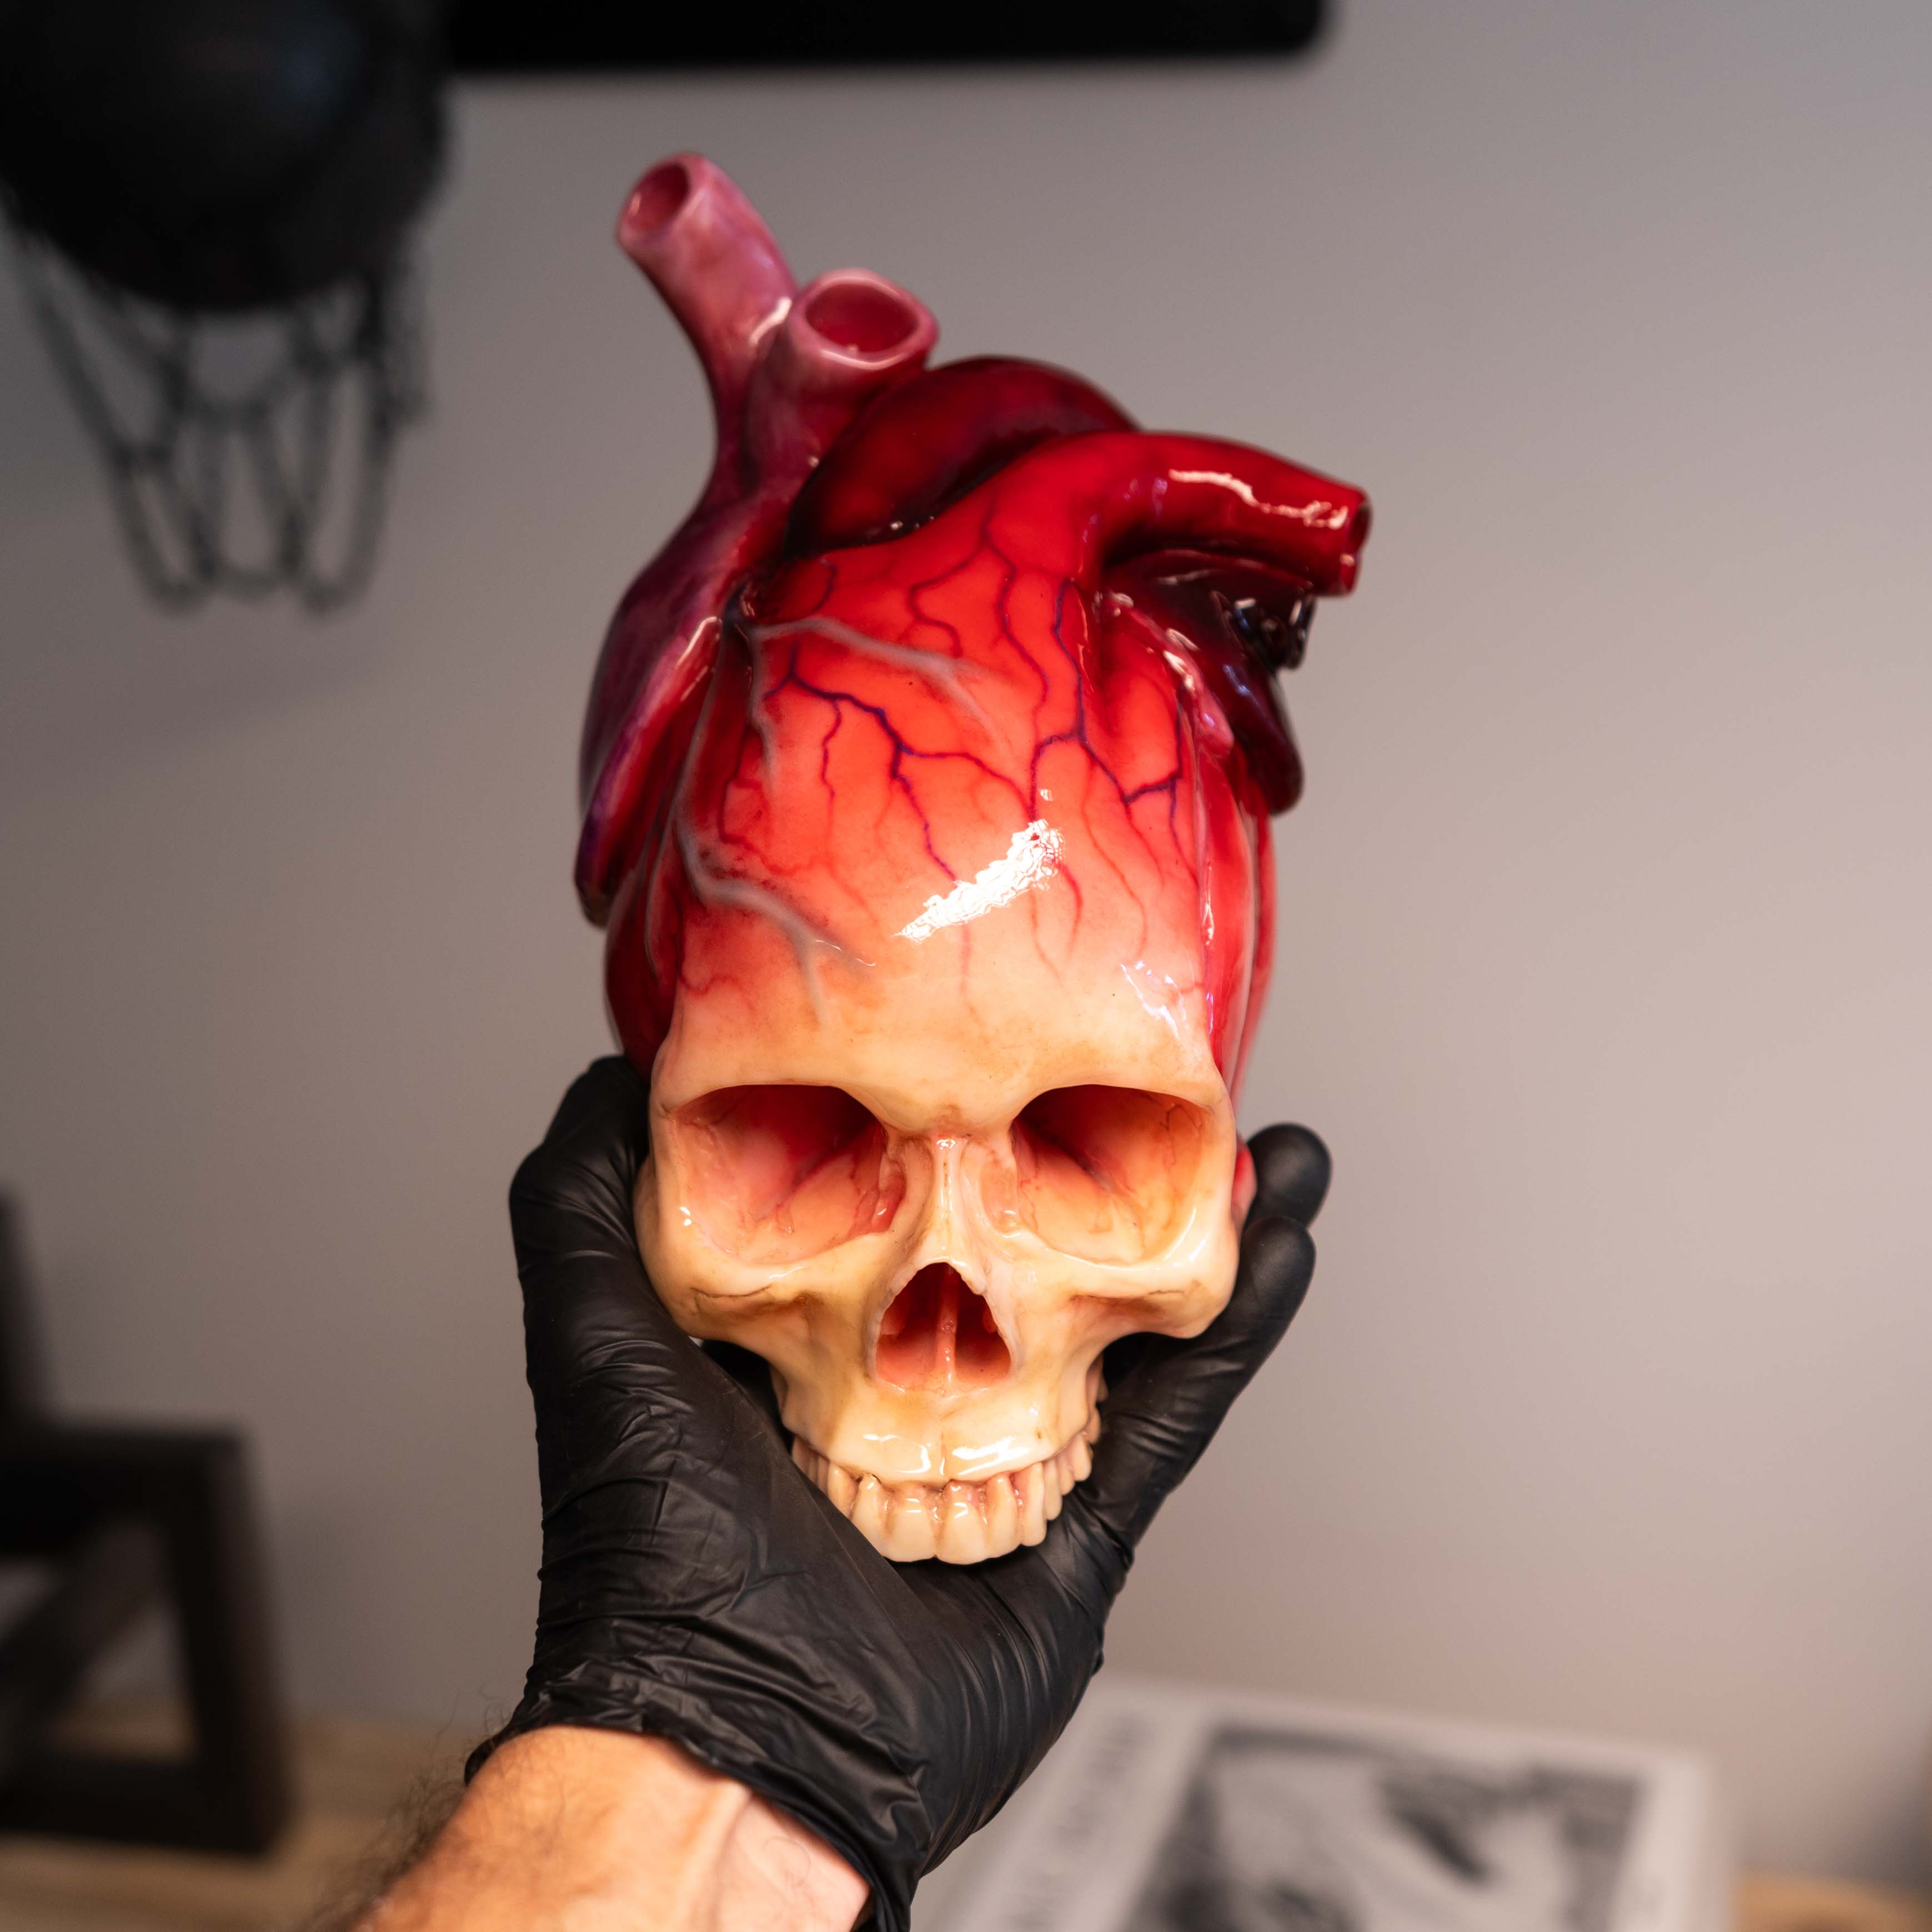 The Tell-Tale Heart Skull